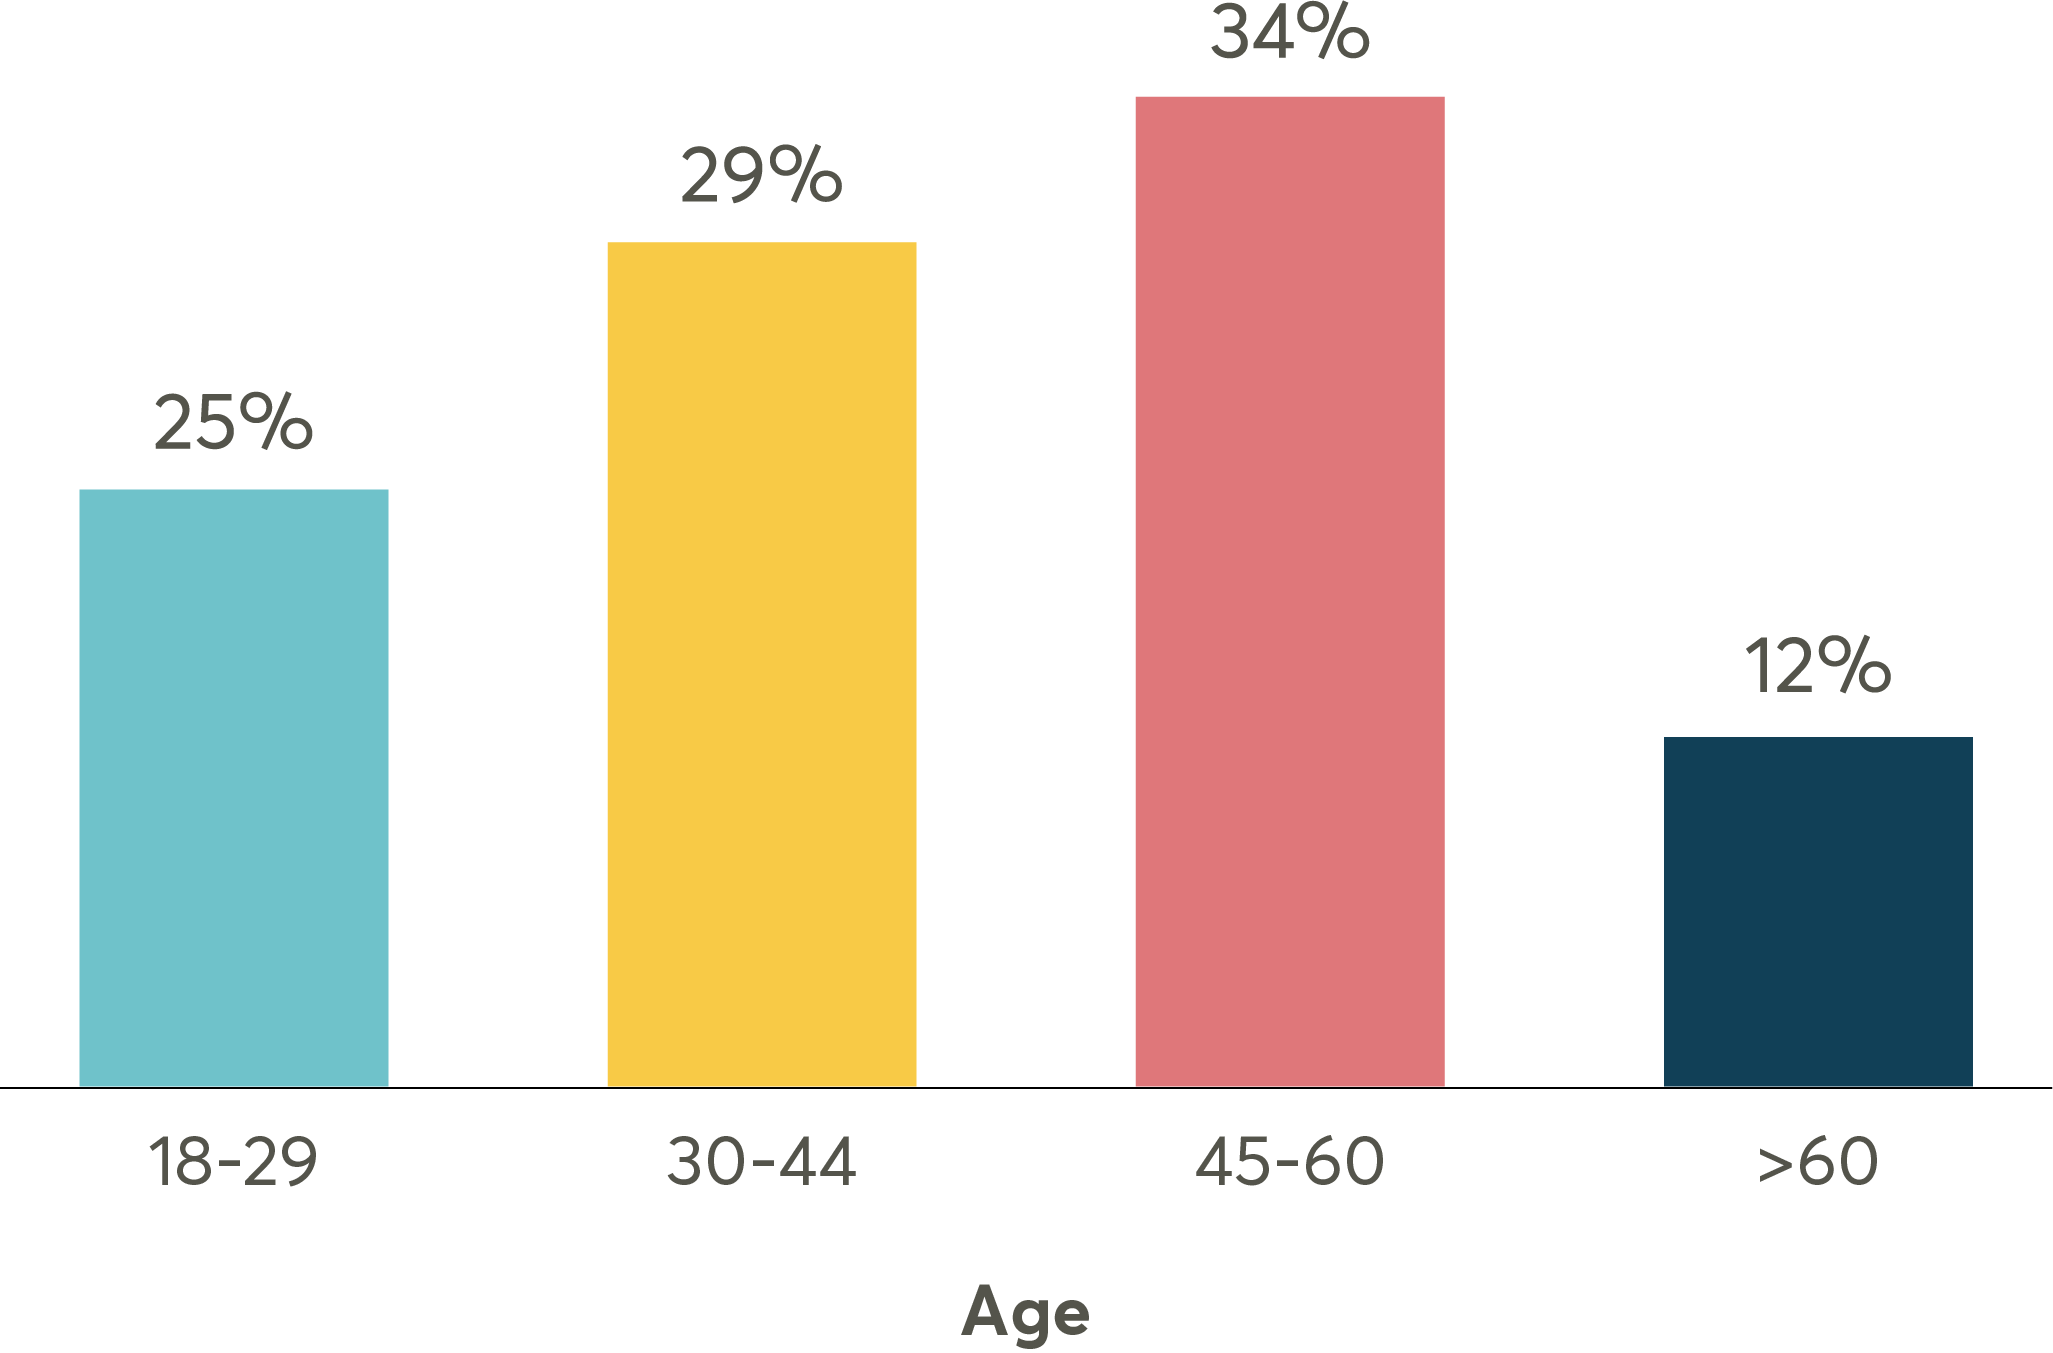 Age distribution of survey respondents 